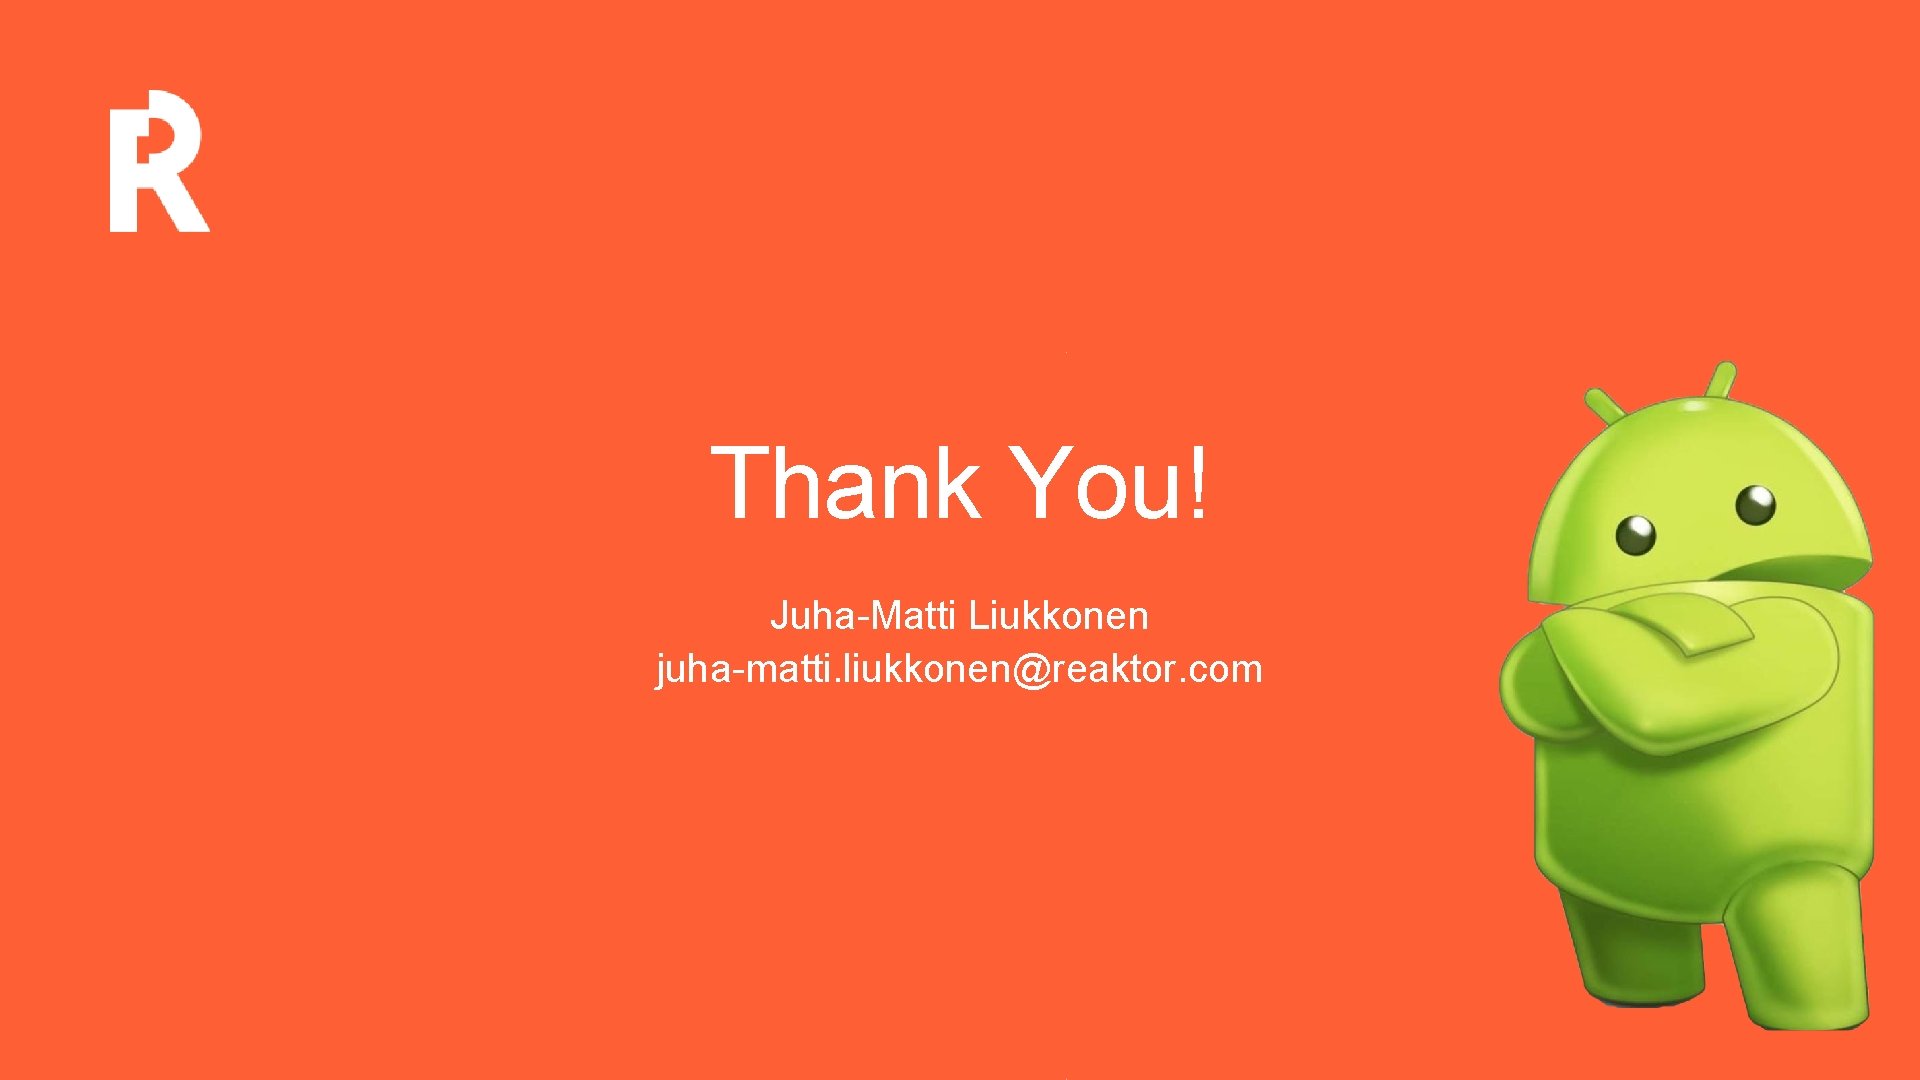 Thank You! Juha-Matti Liukkonen juha-matti. liukkonen@reaktor. com 